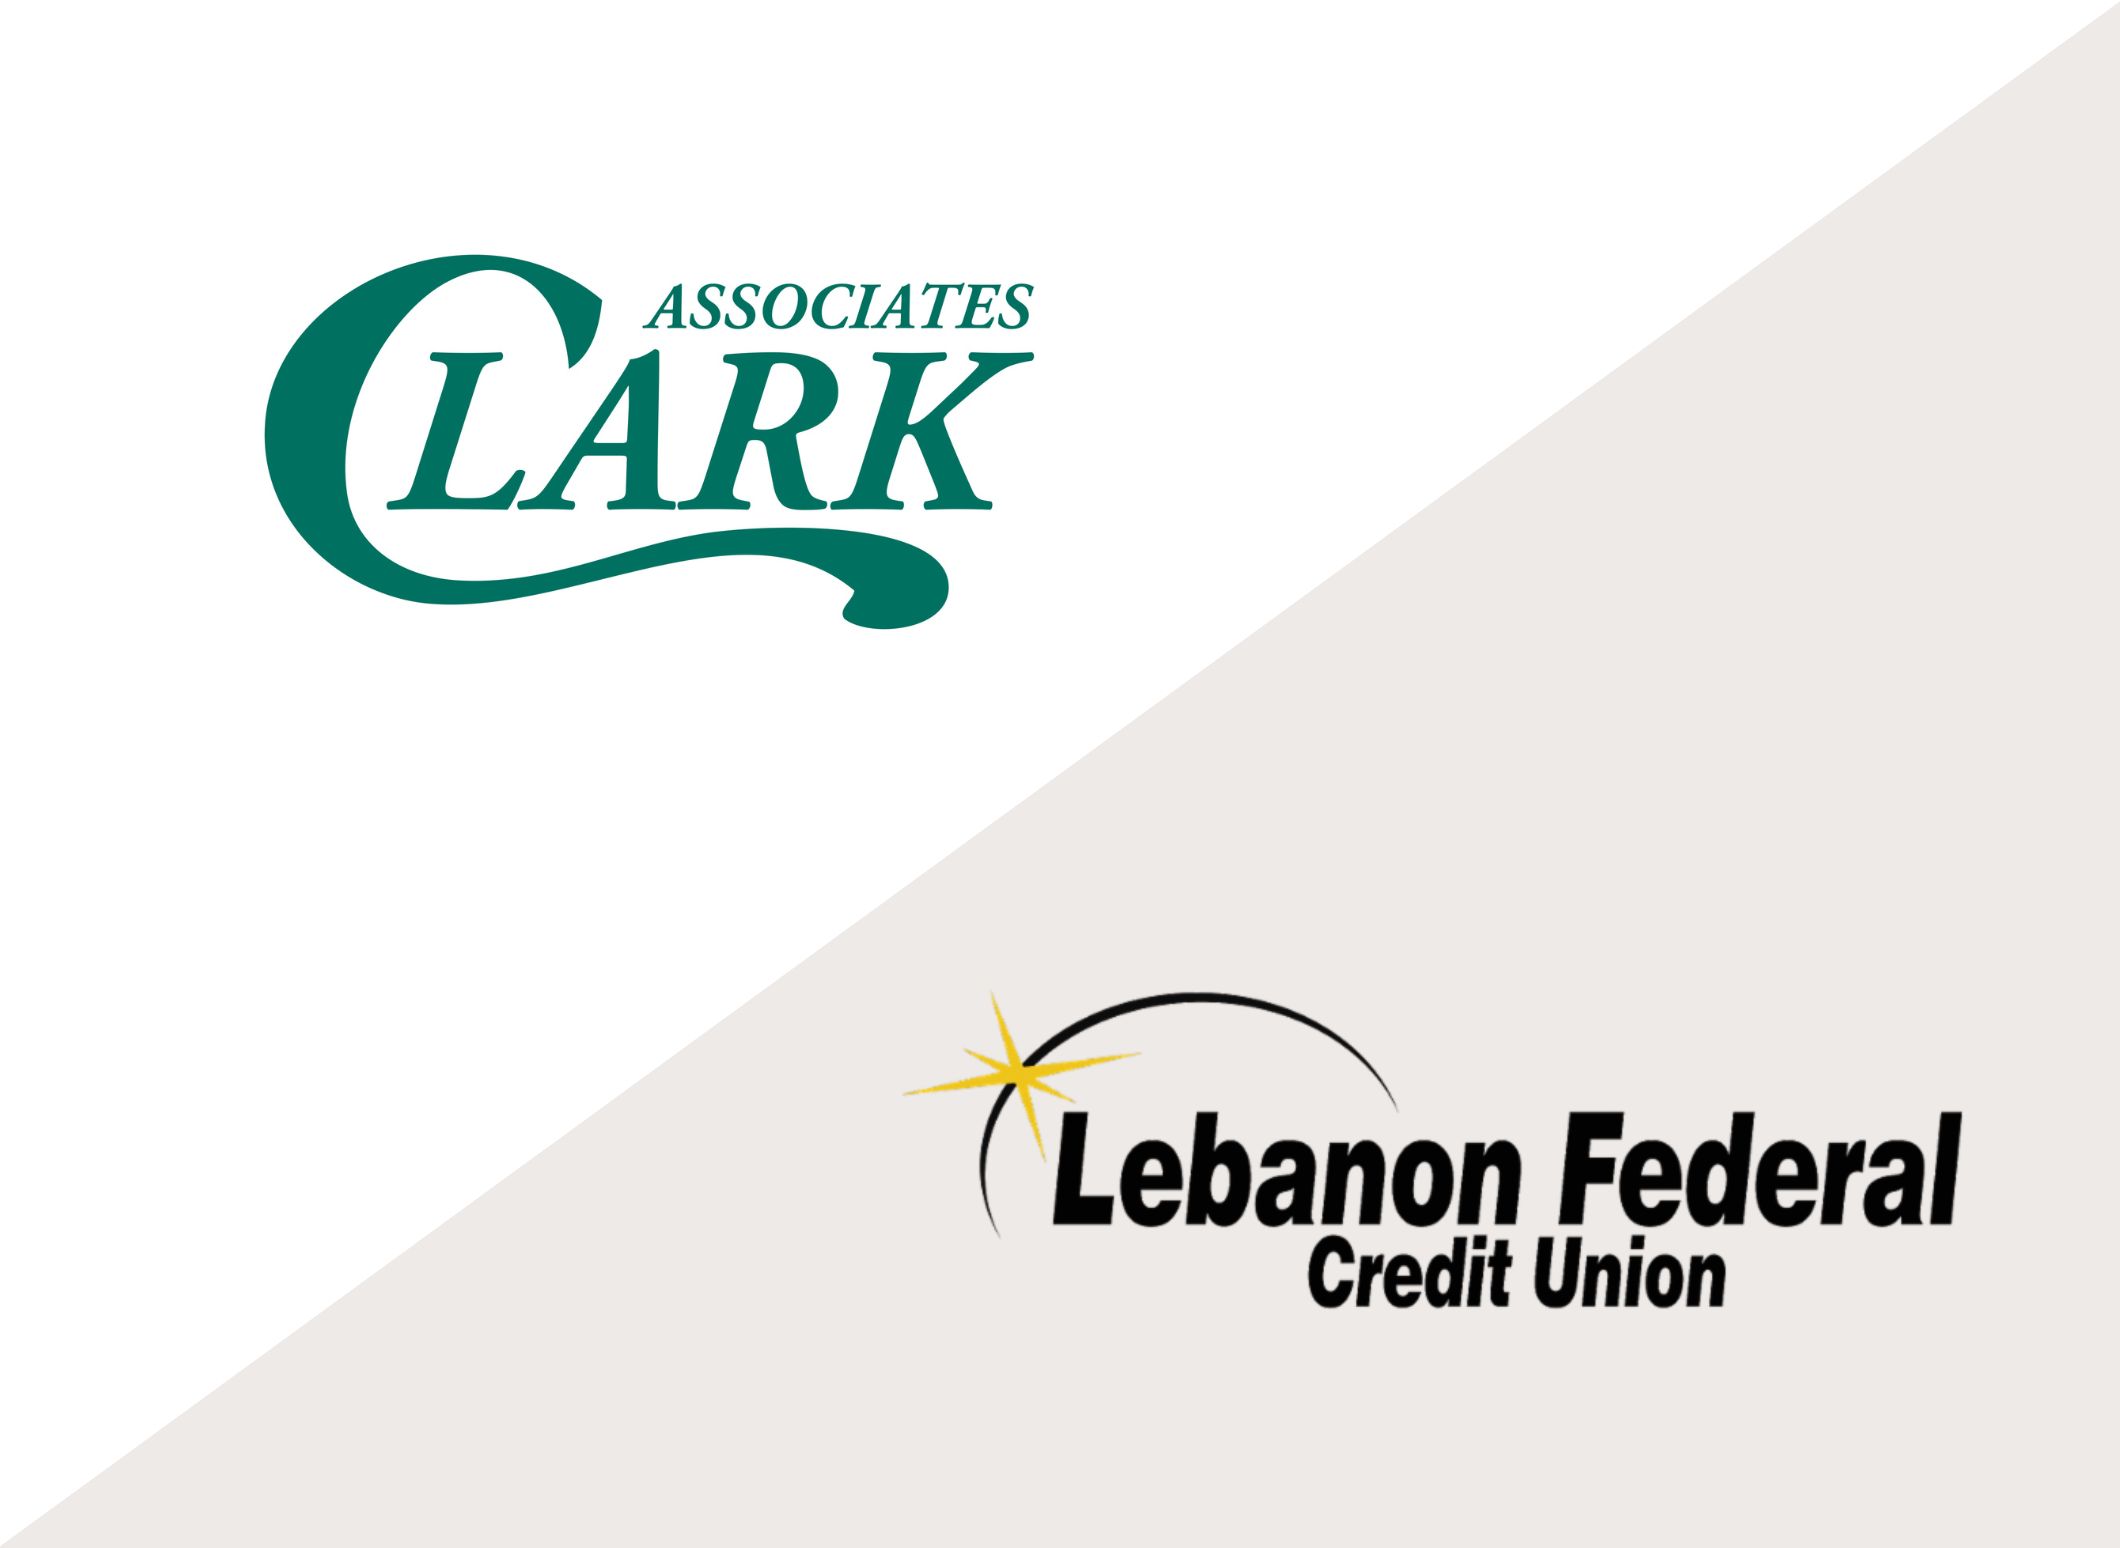 Clark Associates, and Lebanon Federal Credit Union logos